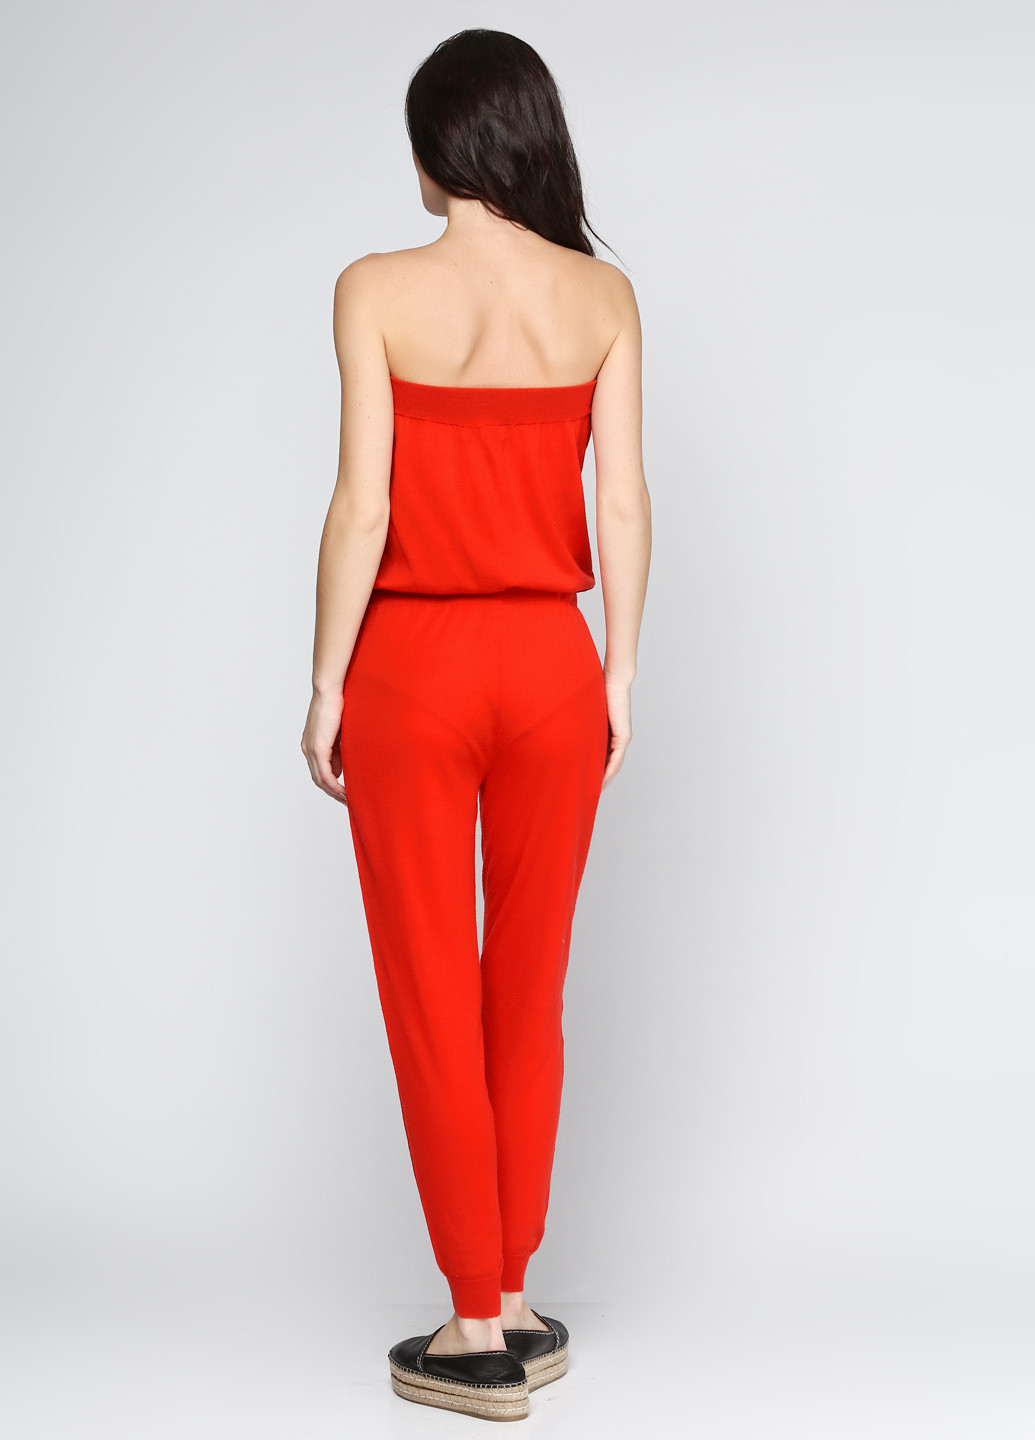 Комбинезон Juicy Couture комбинезон-брюки однотонный красный кэжуал